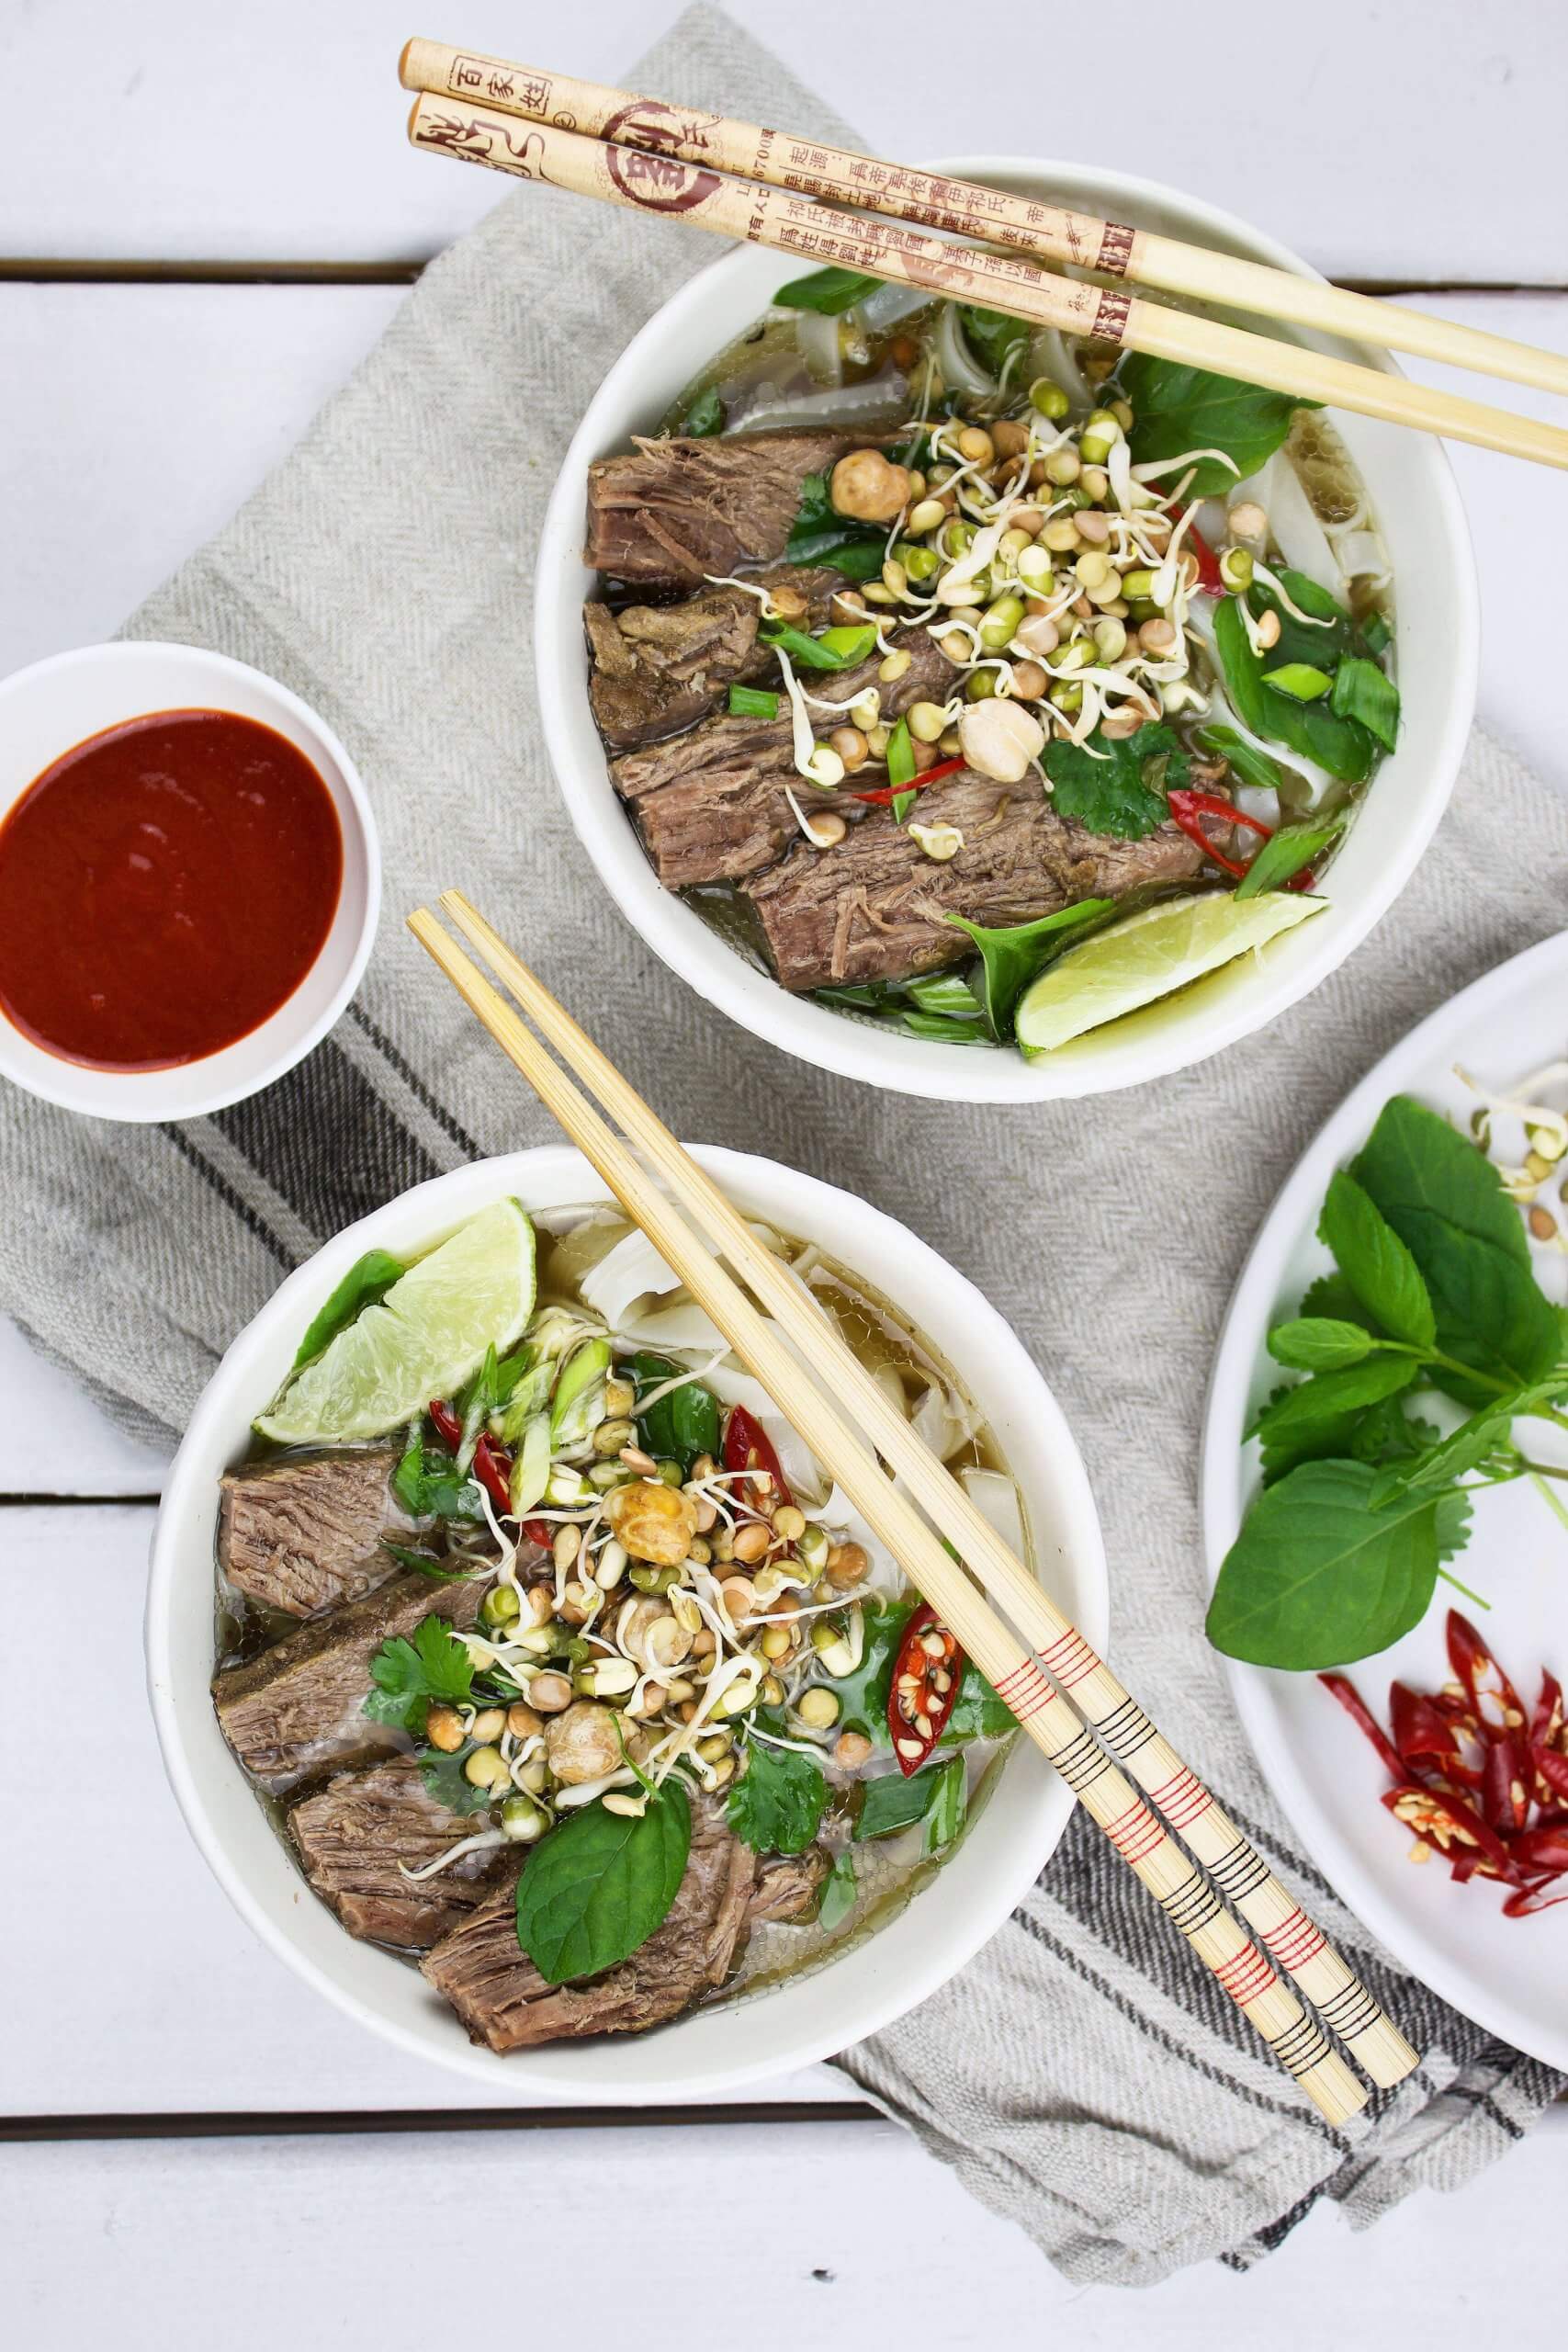 PHO BO – The classic Vietnamese soup